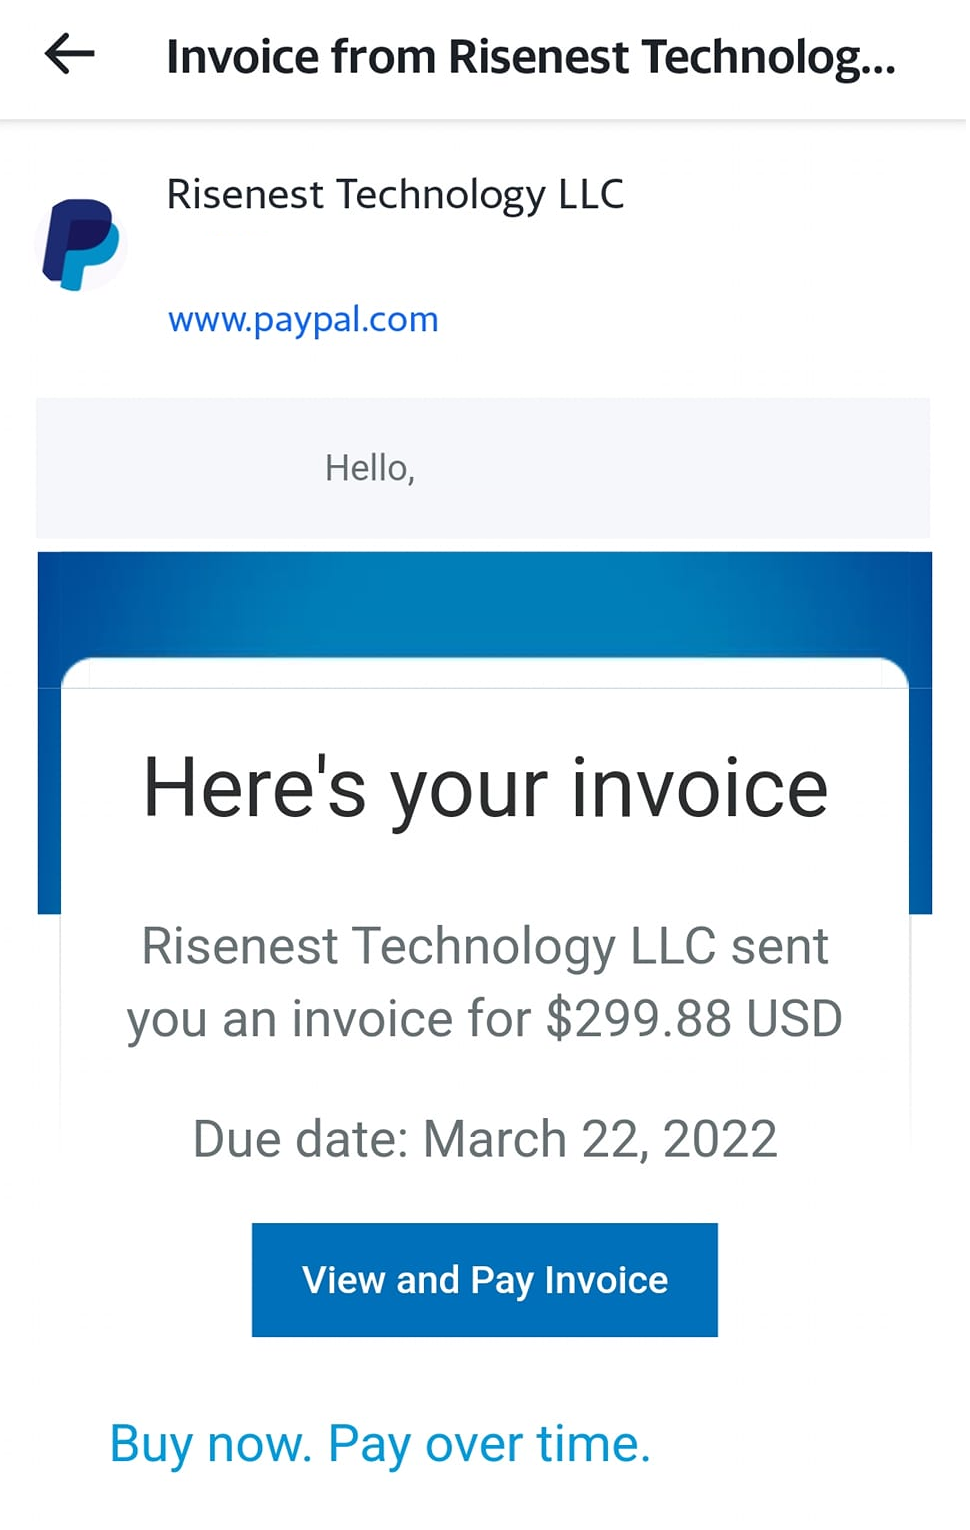 Risenest Technology LLC Scam Email Invoice